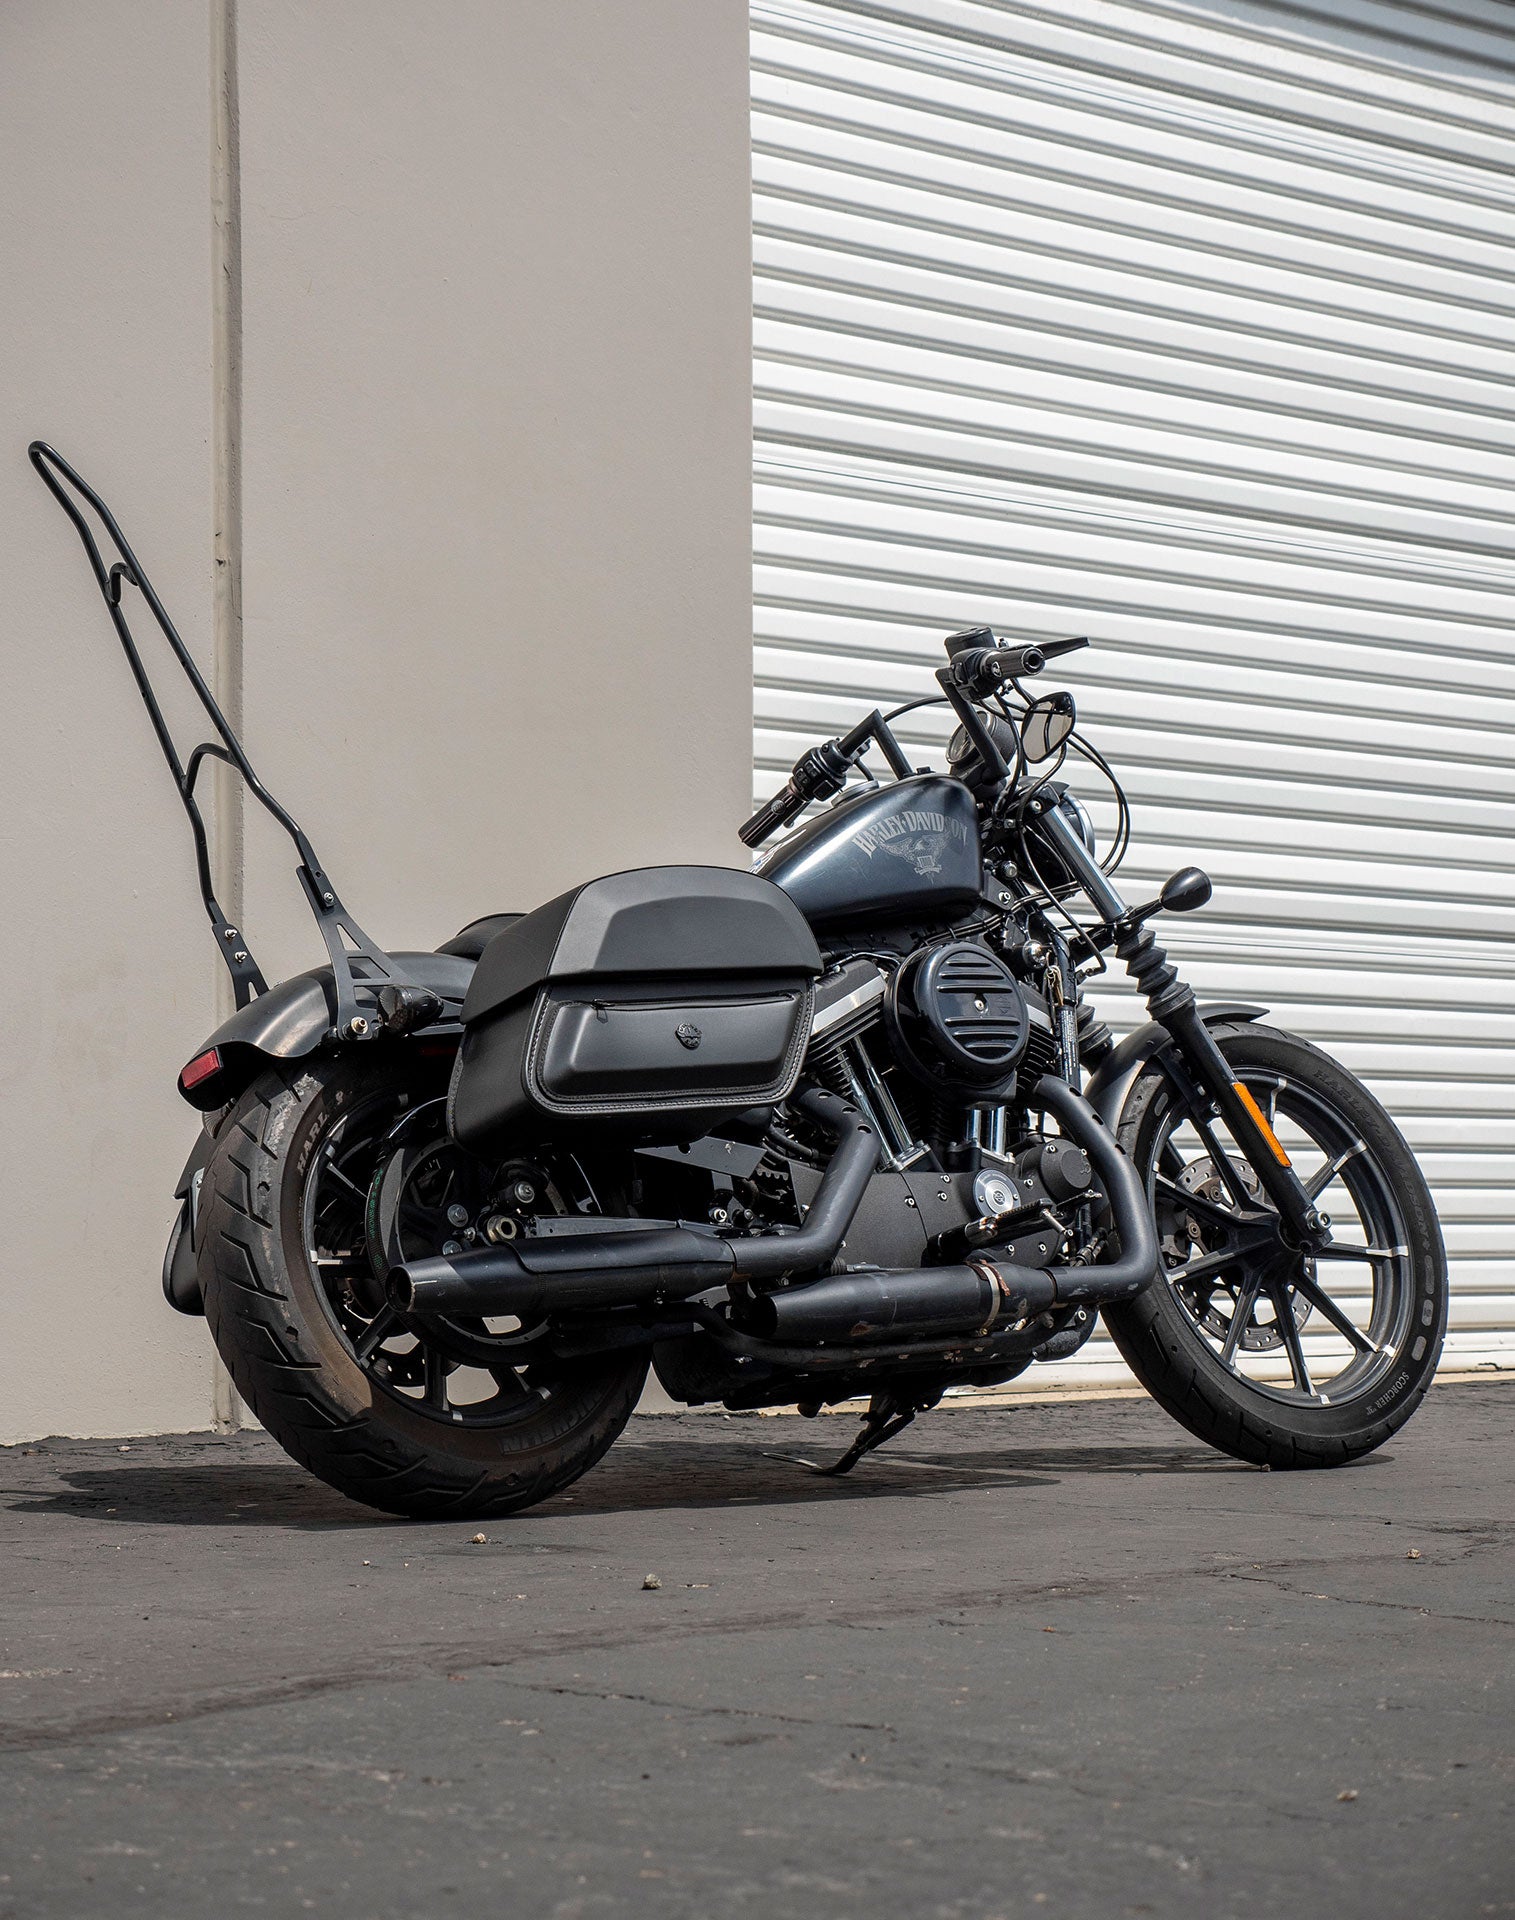 28L - Pantheon Medium Quick-Mount Motorcycle Saddlebags For Harley Sportster 883 Iron XL883N